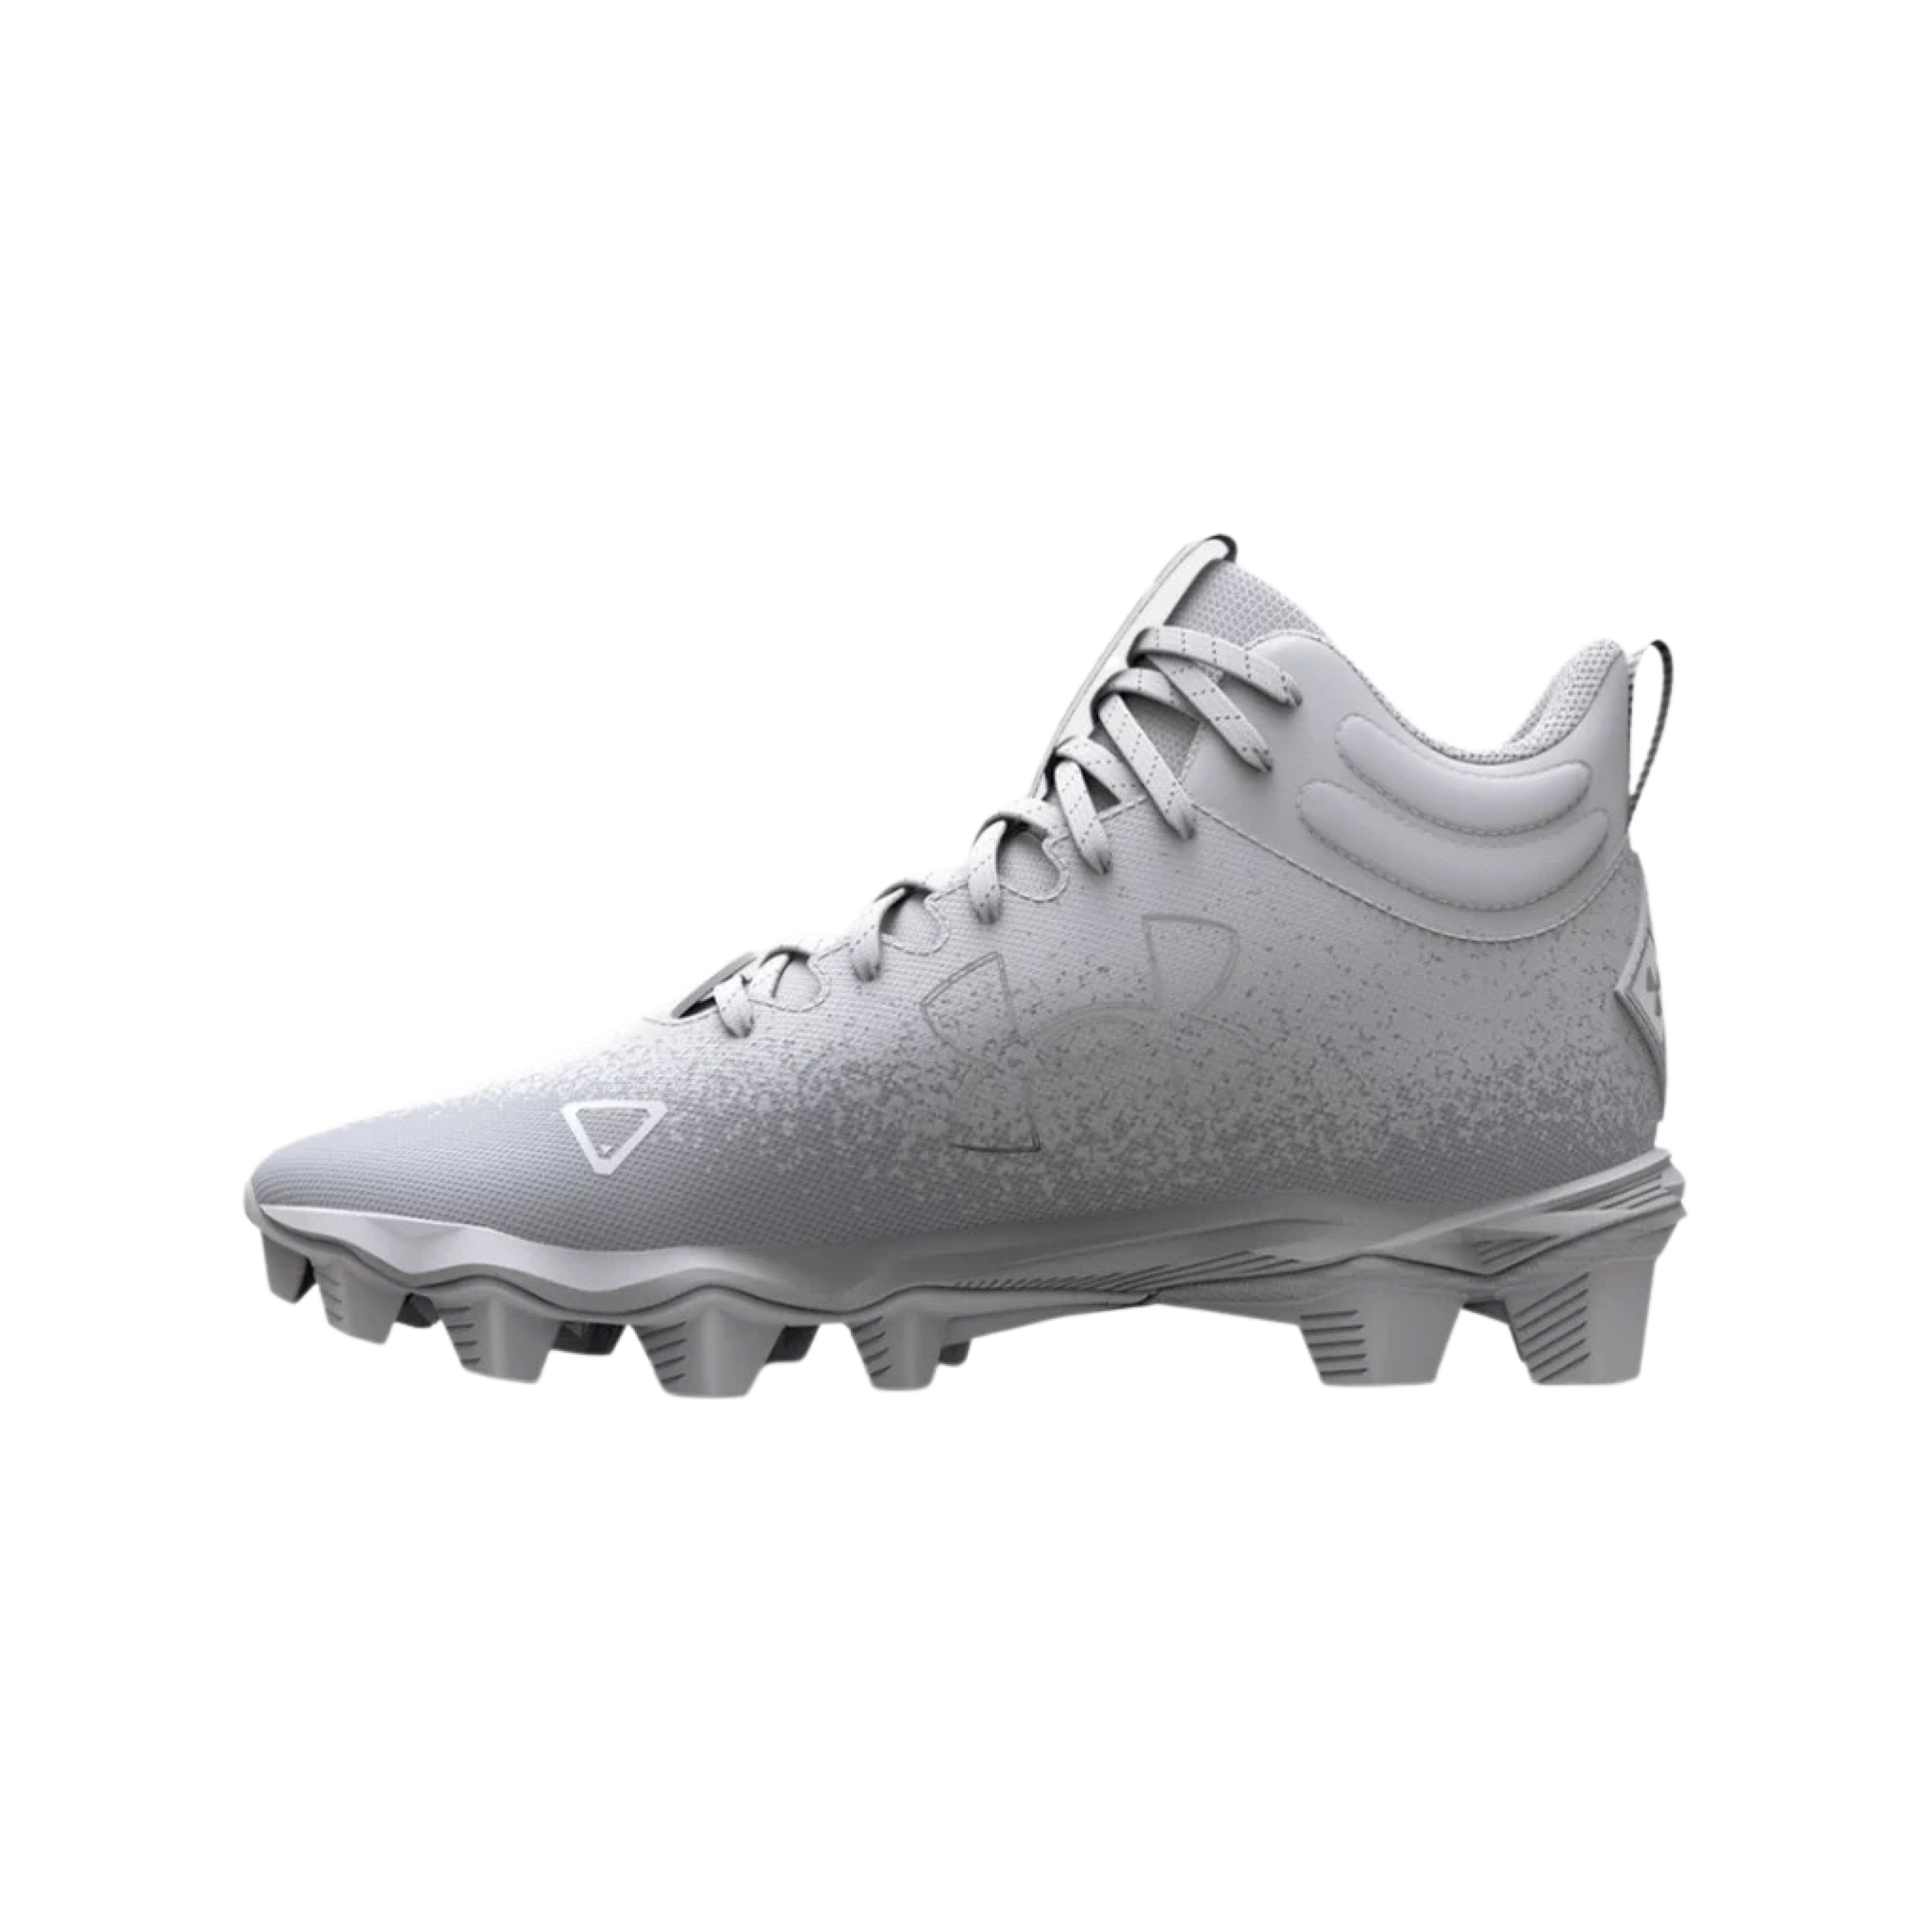 Under Armor Kids' Spotlight Franchise RM Football Cleats - White-Children's football shoe in white color